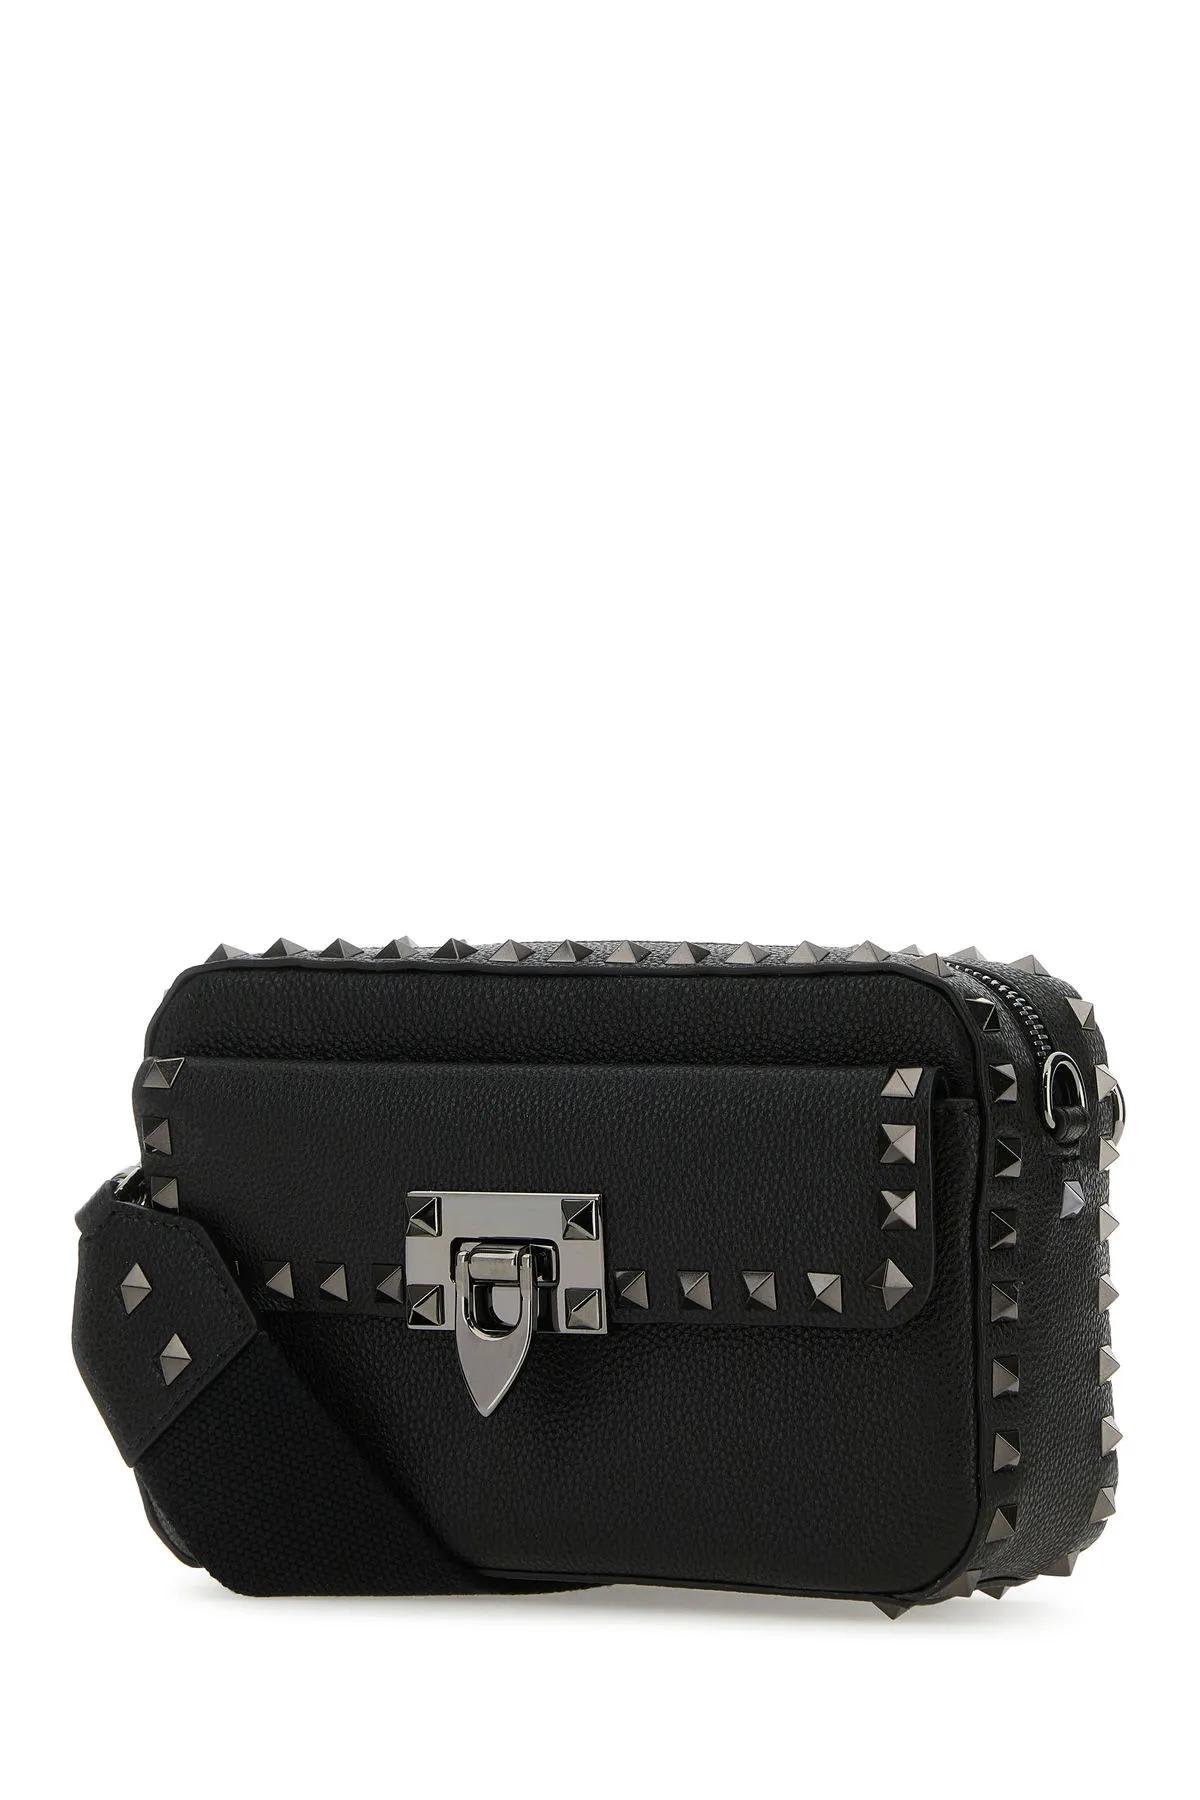 Shop Valentino Black Leather Rockstud Crossbody Bag